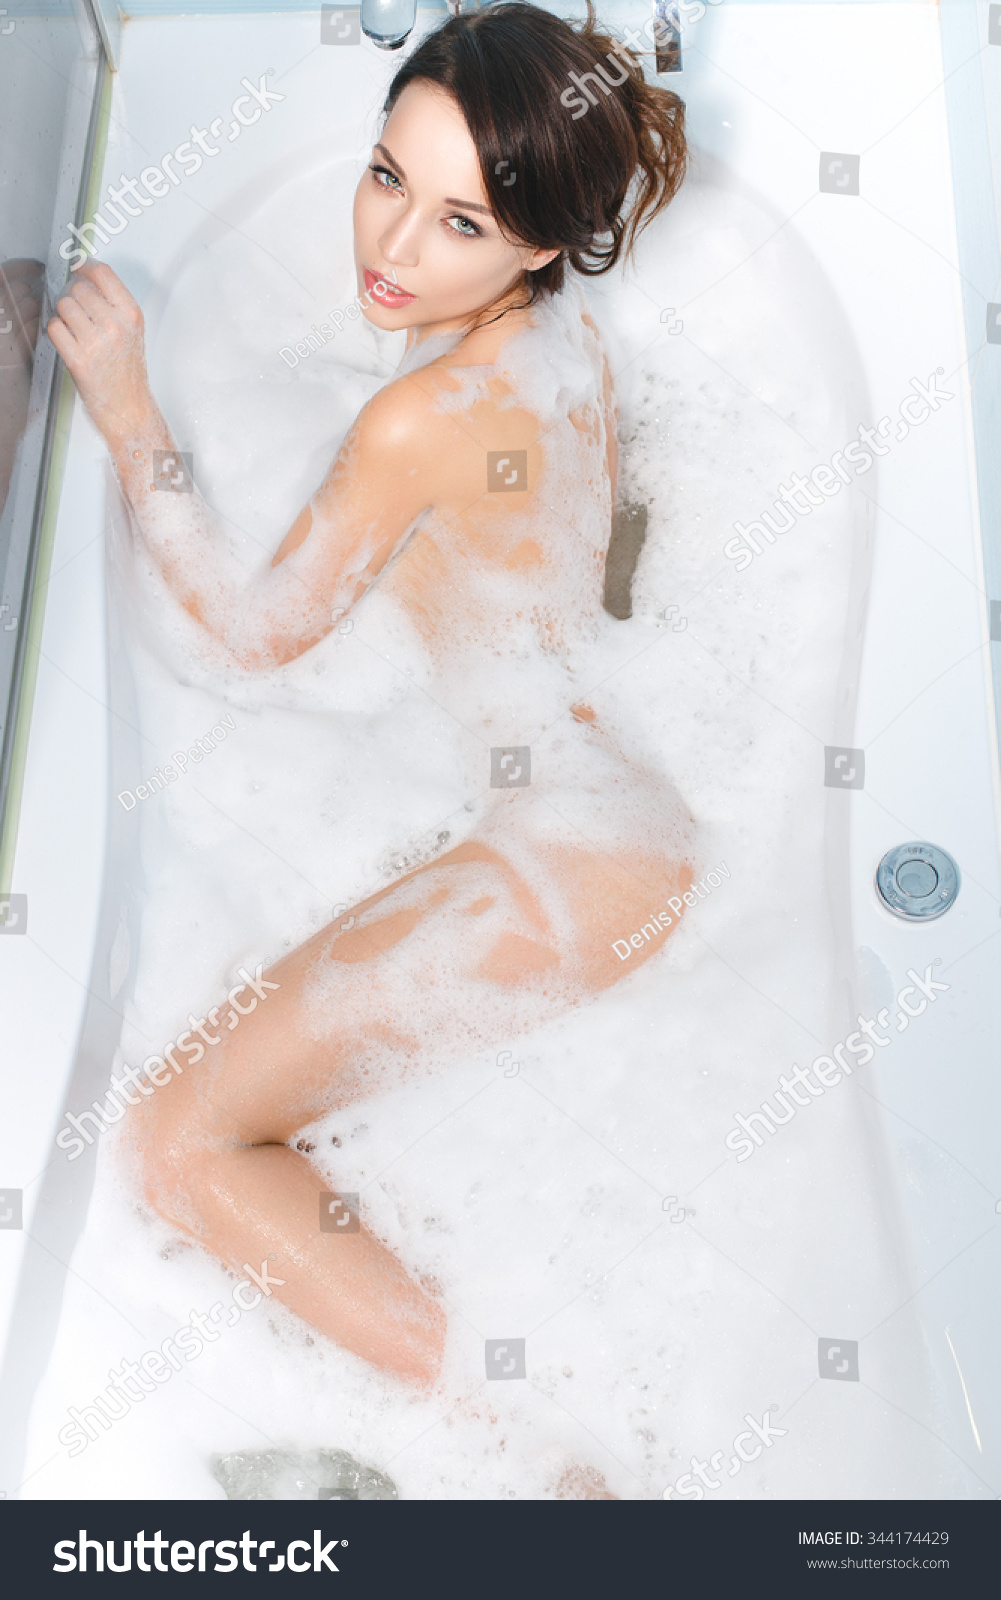 Nude Girls In Bath